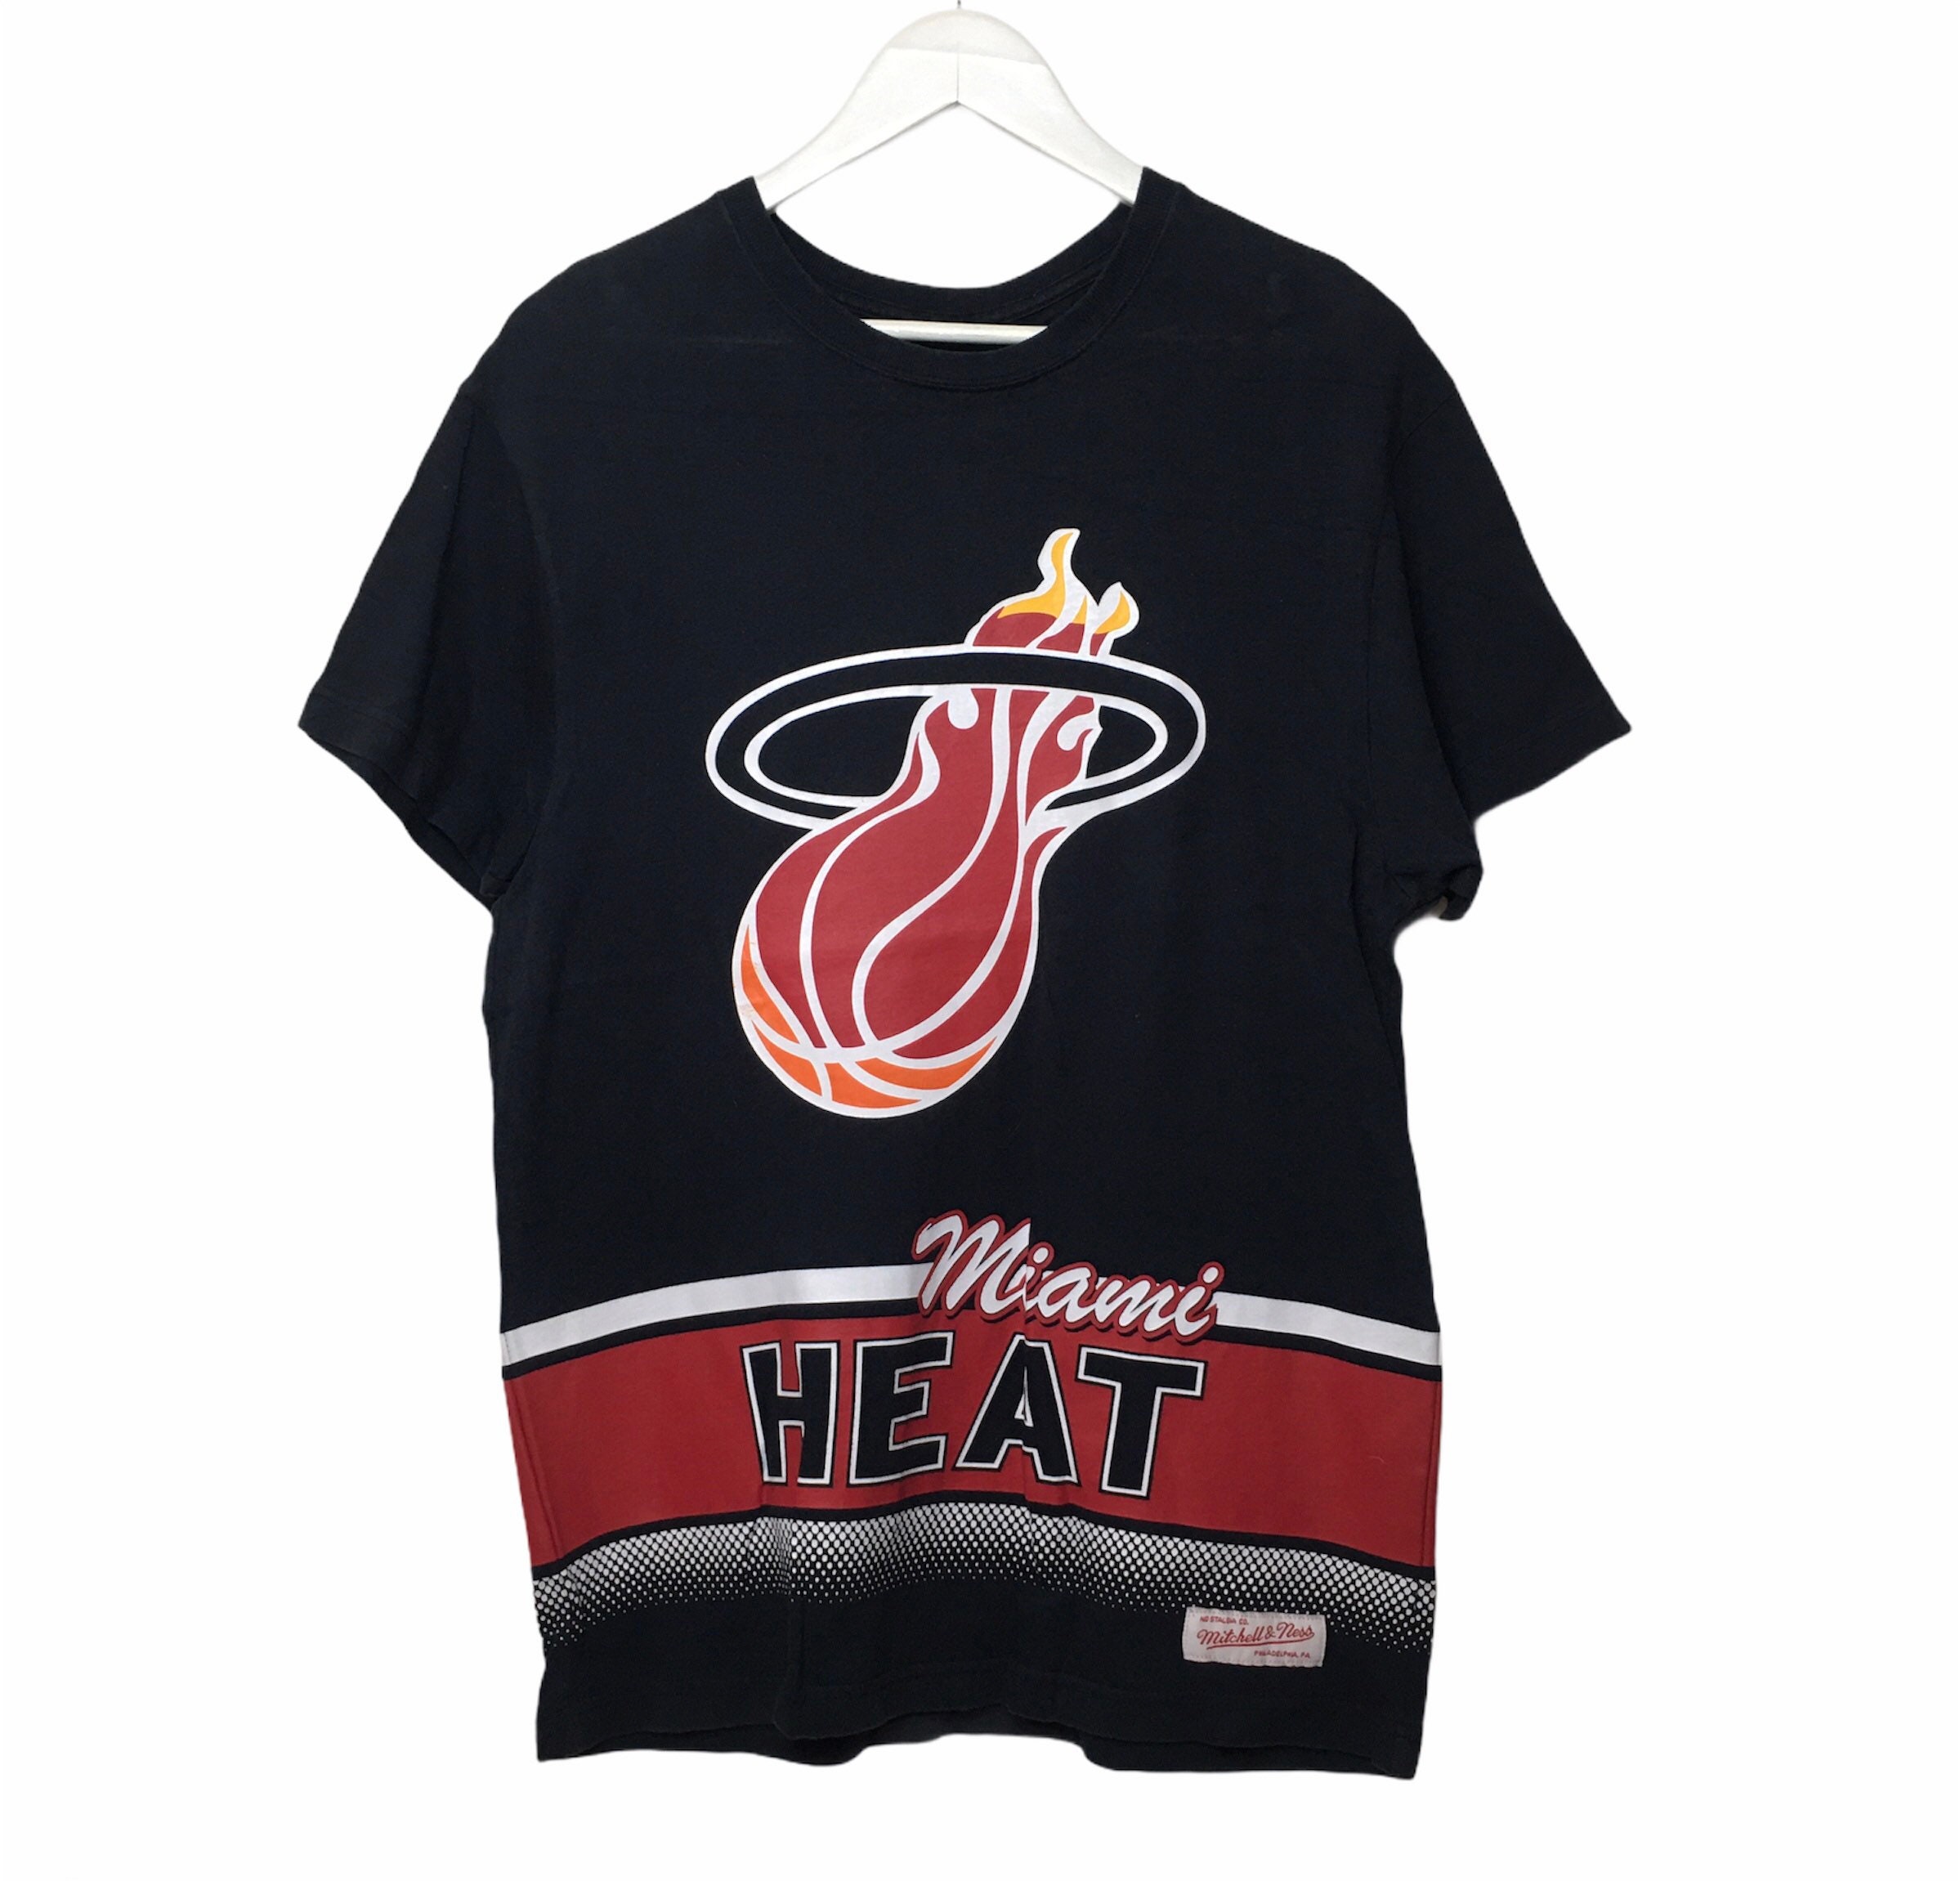 The Elite Heat Shirt Miami T-shirt NBA Vintage - Trends Bedding